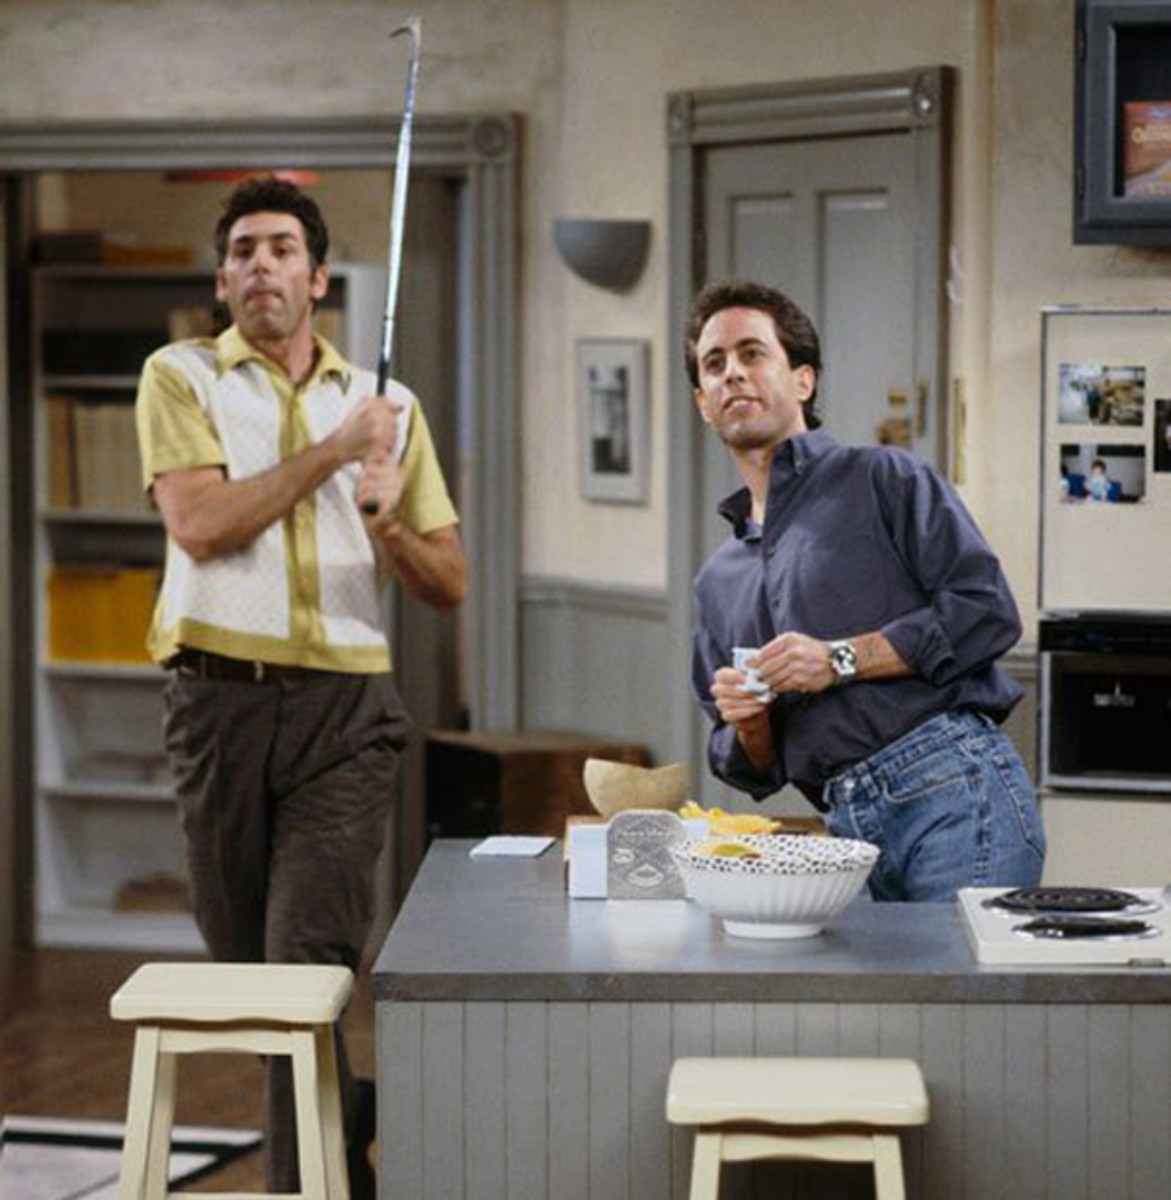 The Cotton Uniforms - Seinfeld 